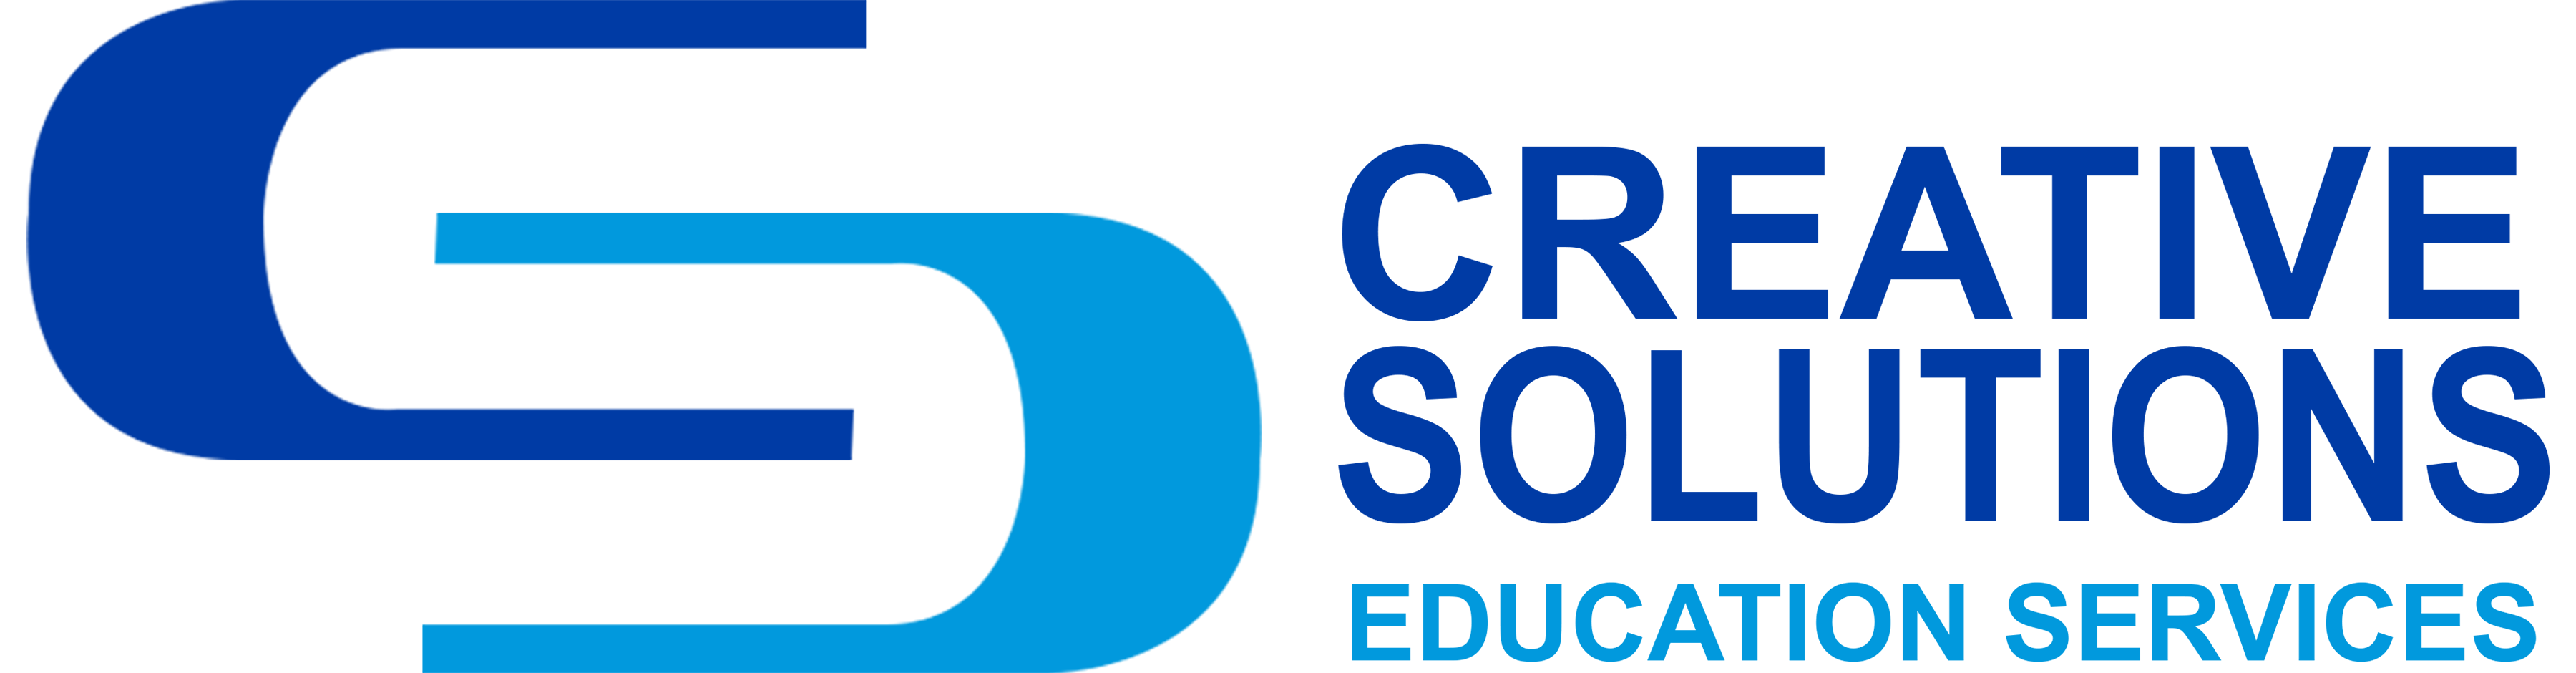 logo-of-cses-new-1